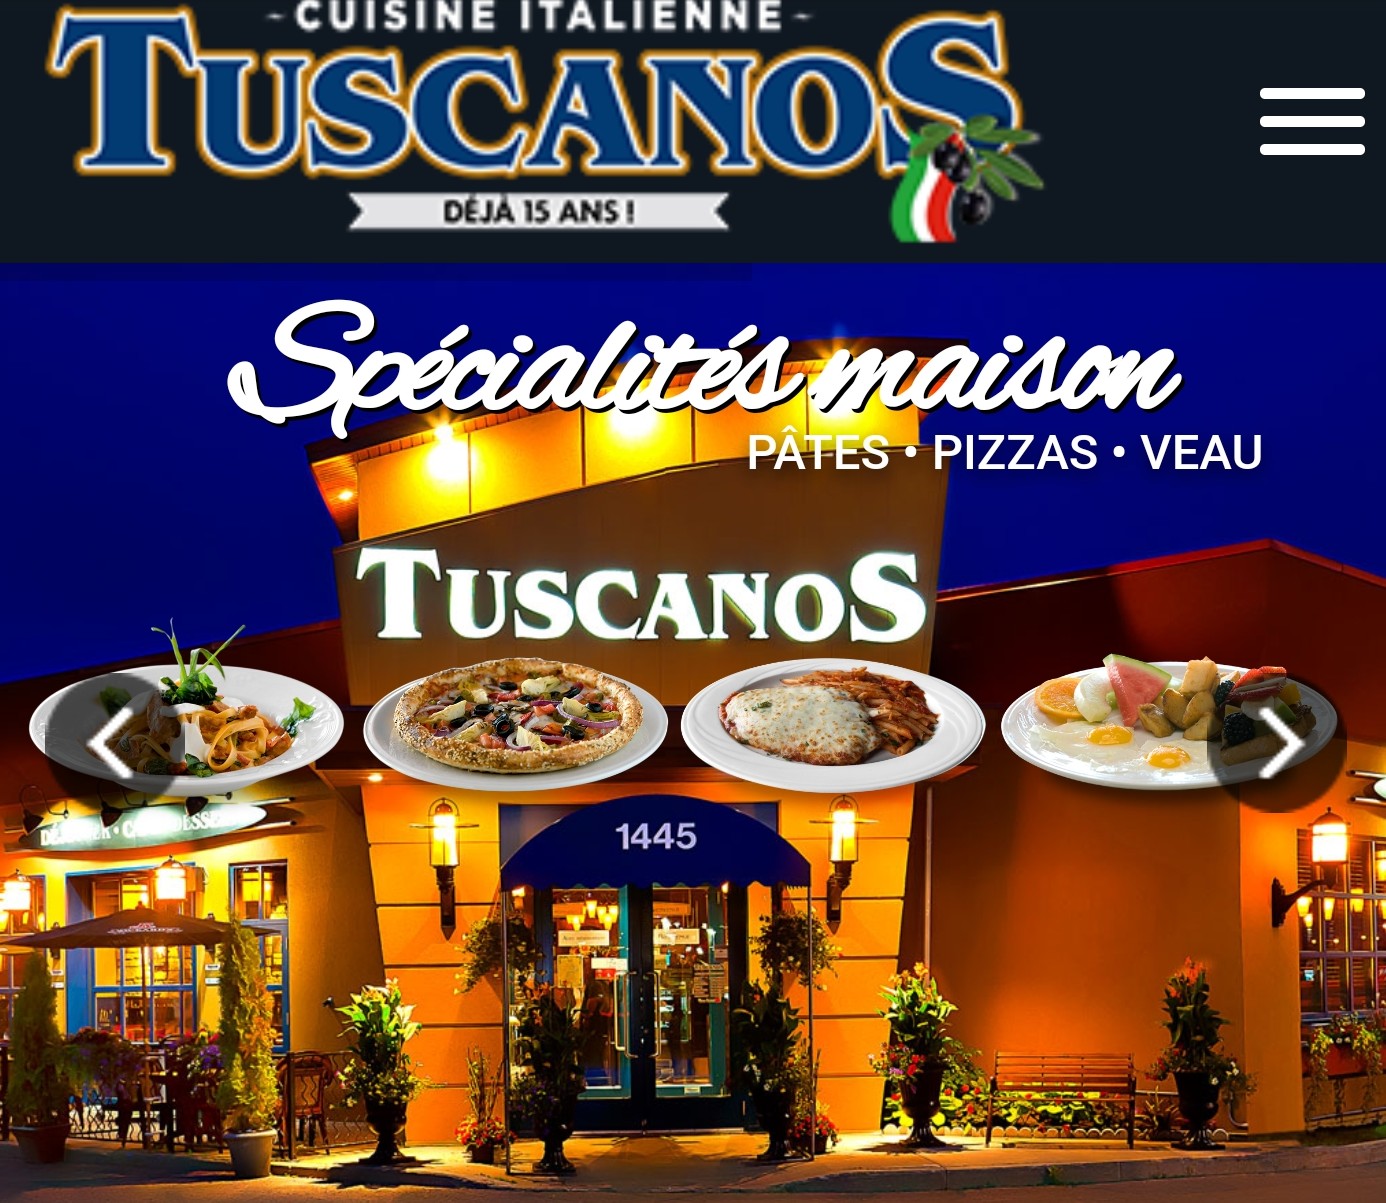 Tuscanos 2019